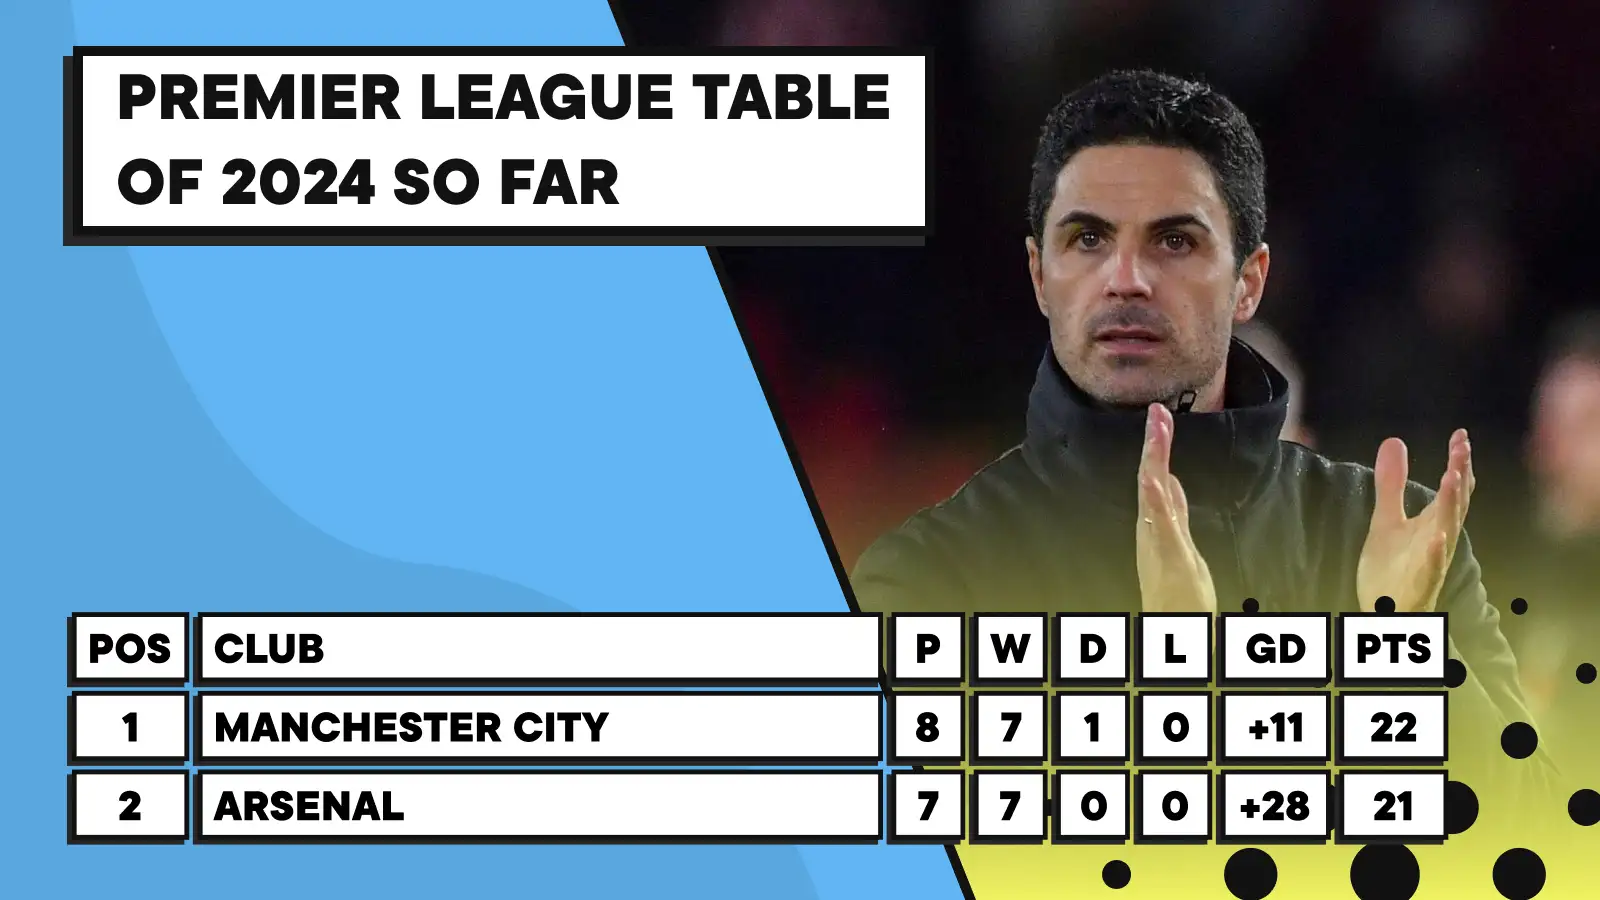 The Premier League table of 2024 so far Arsenal flawless, Man City